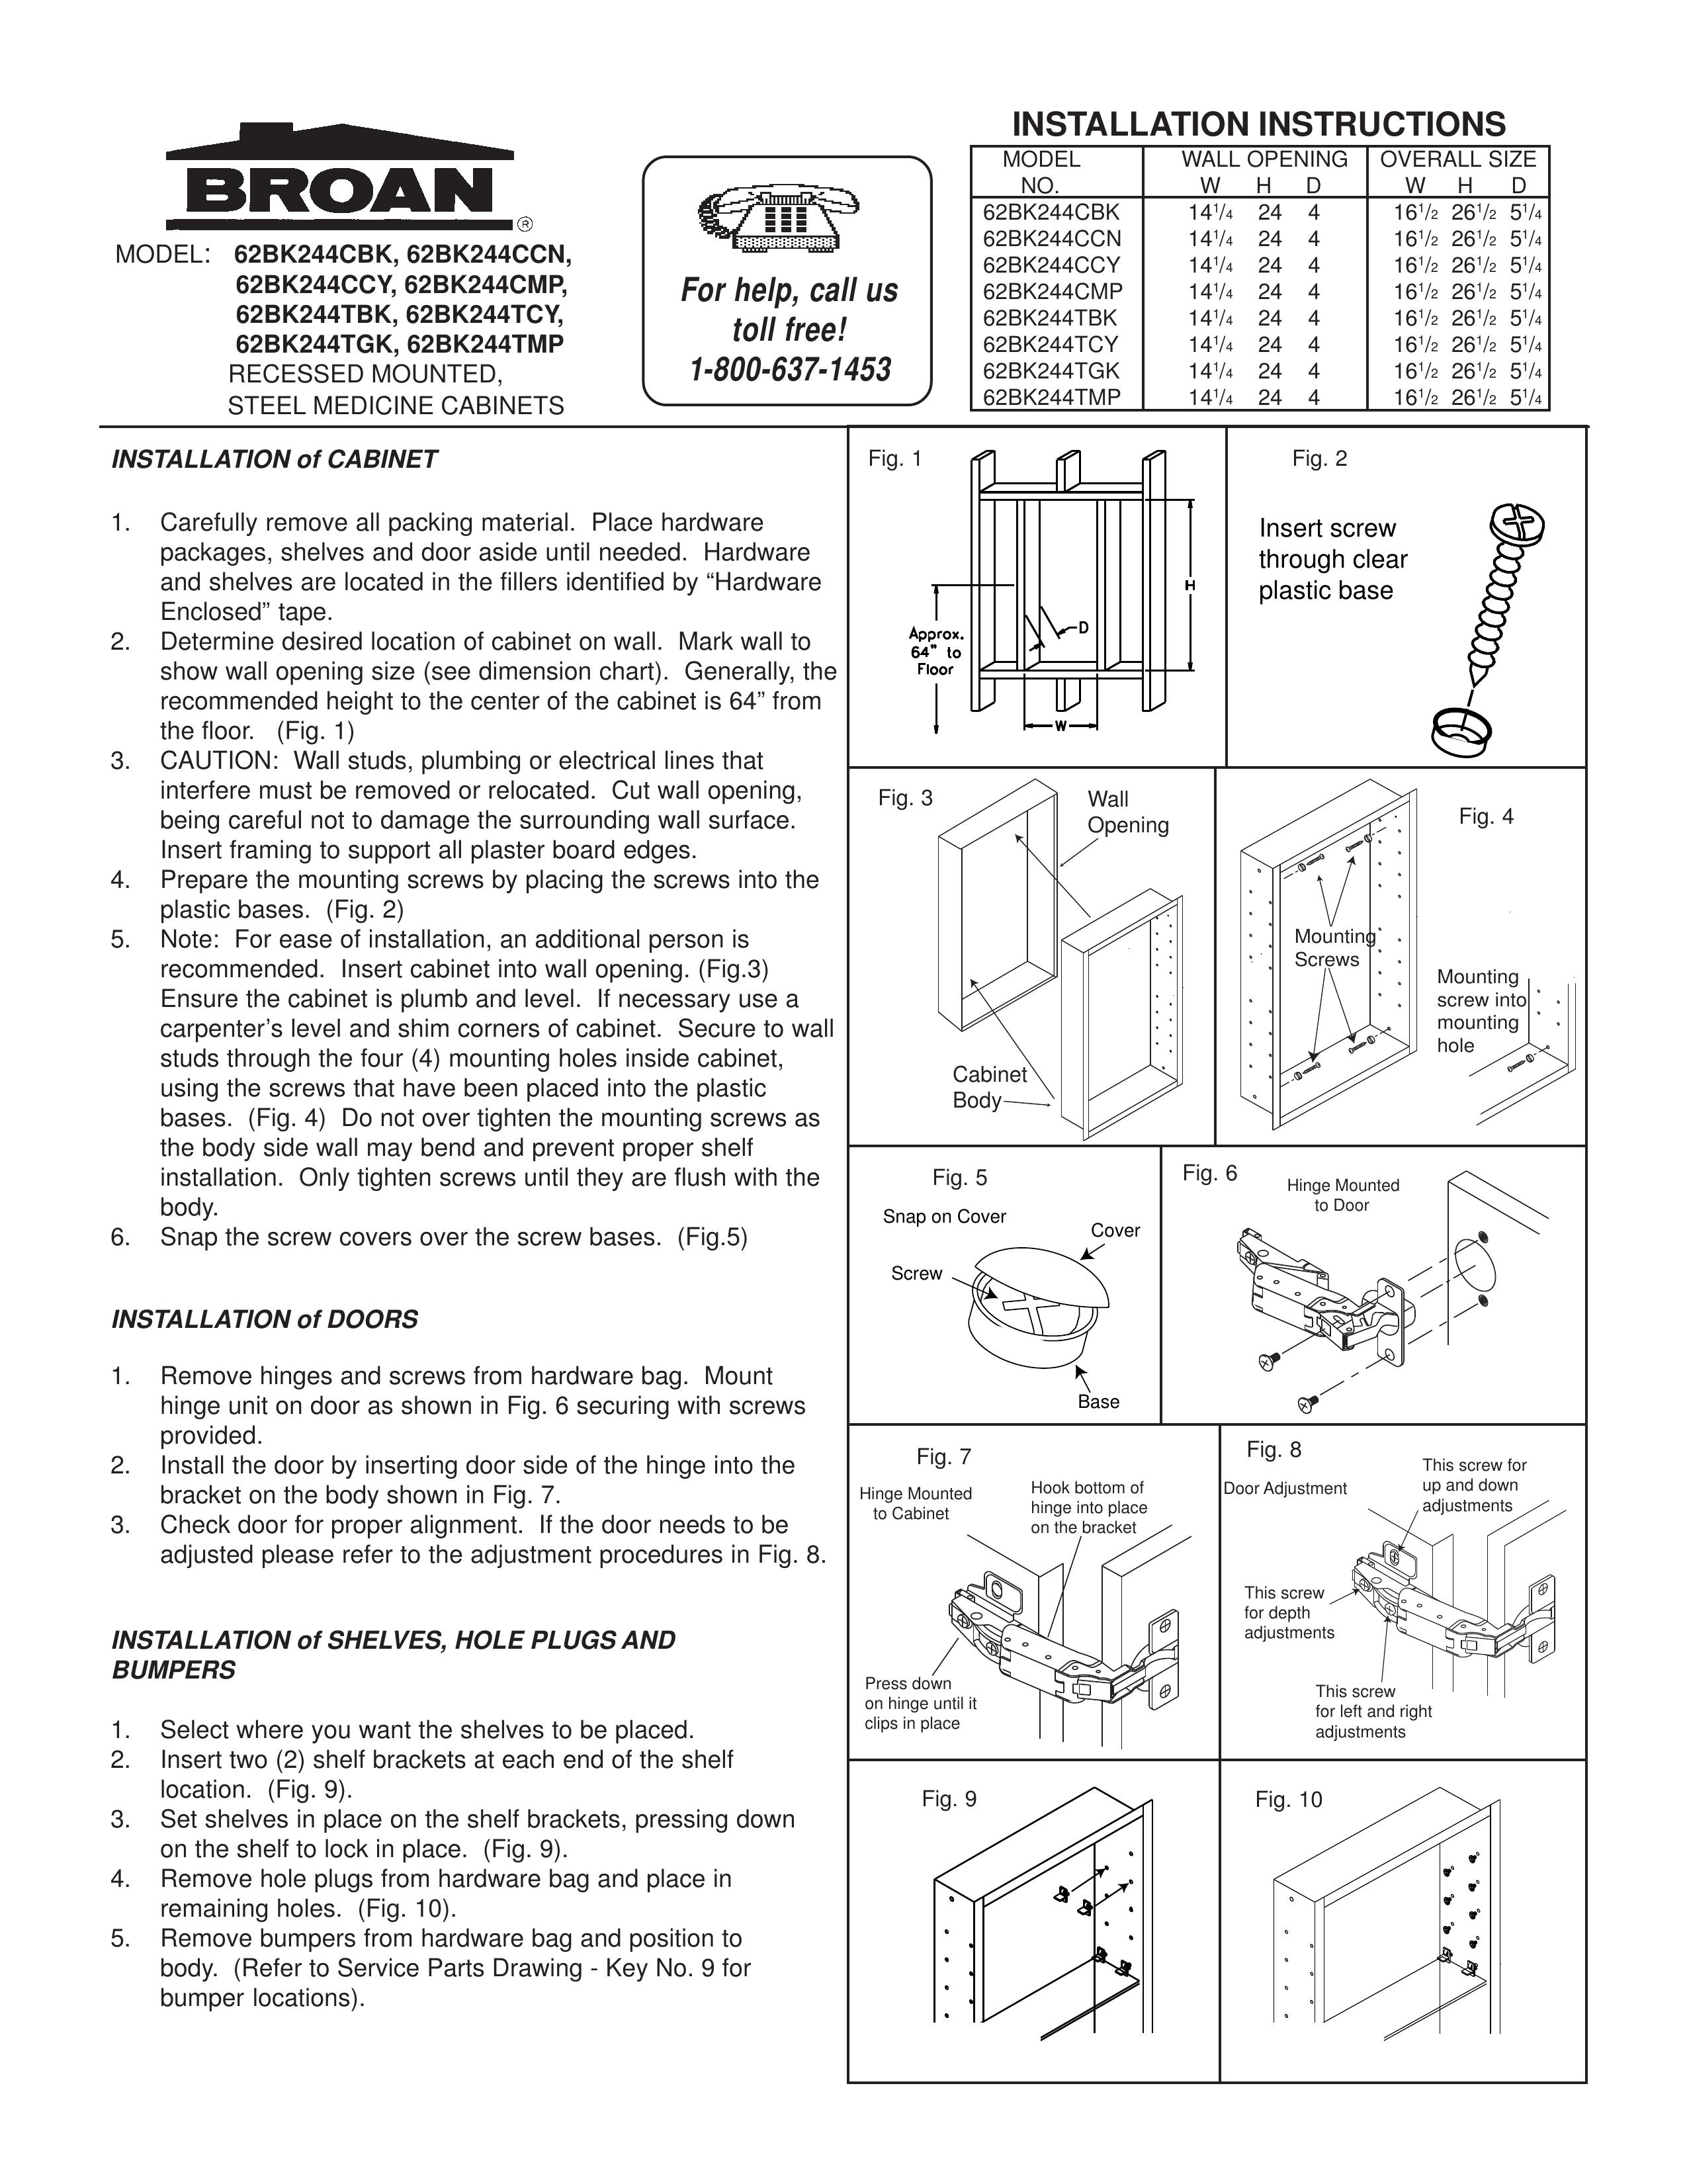 Broan 62BK244CCY Patio Furniture User Manual